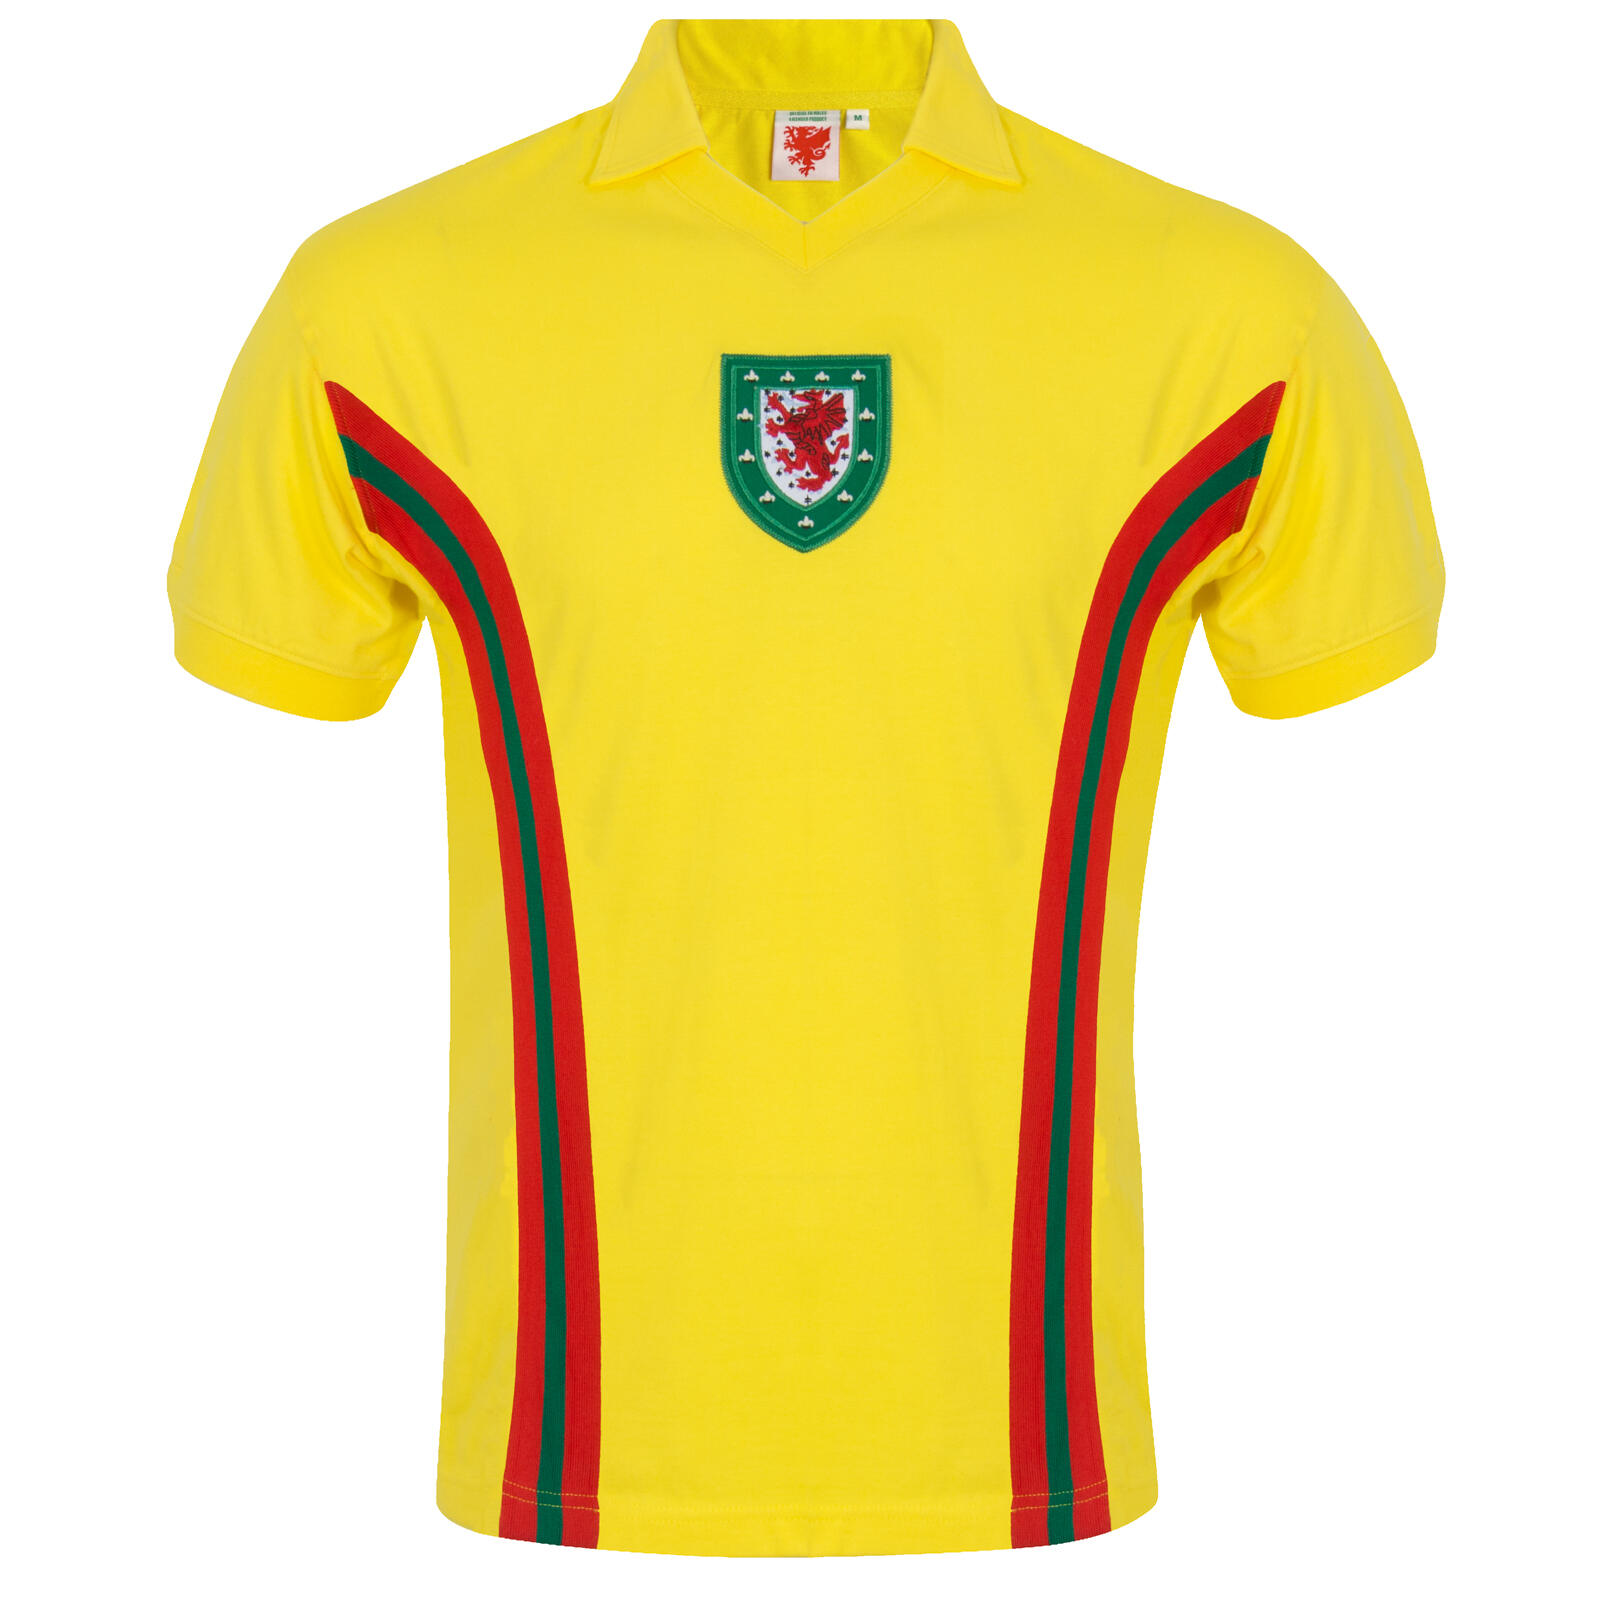 FA WALES Wales Cymru FAW Official Gift Mens Retro 1958/1976/1984 Football Kit Shirt Red